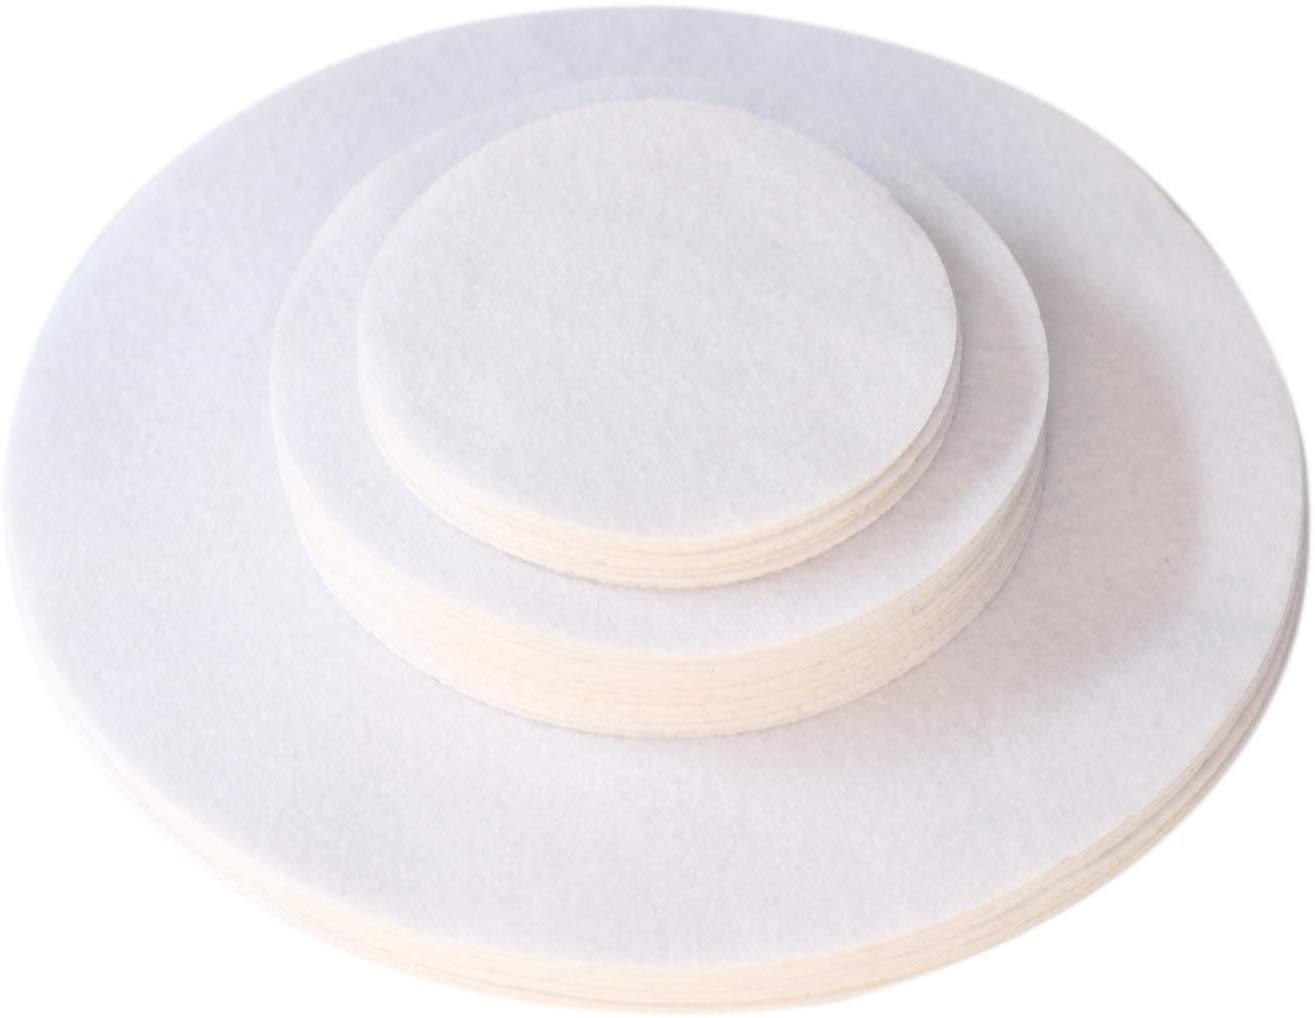 12-10", 24-6", 12-4.5" Soft White, Dish Separator Pads, Felt Plate Dividers Set of 48